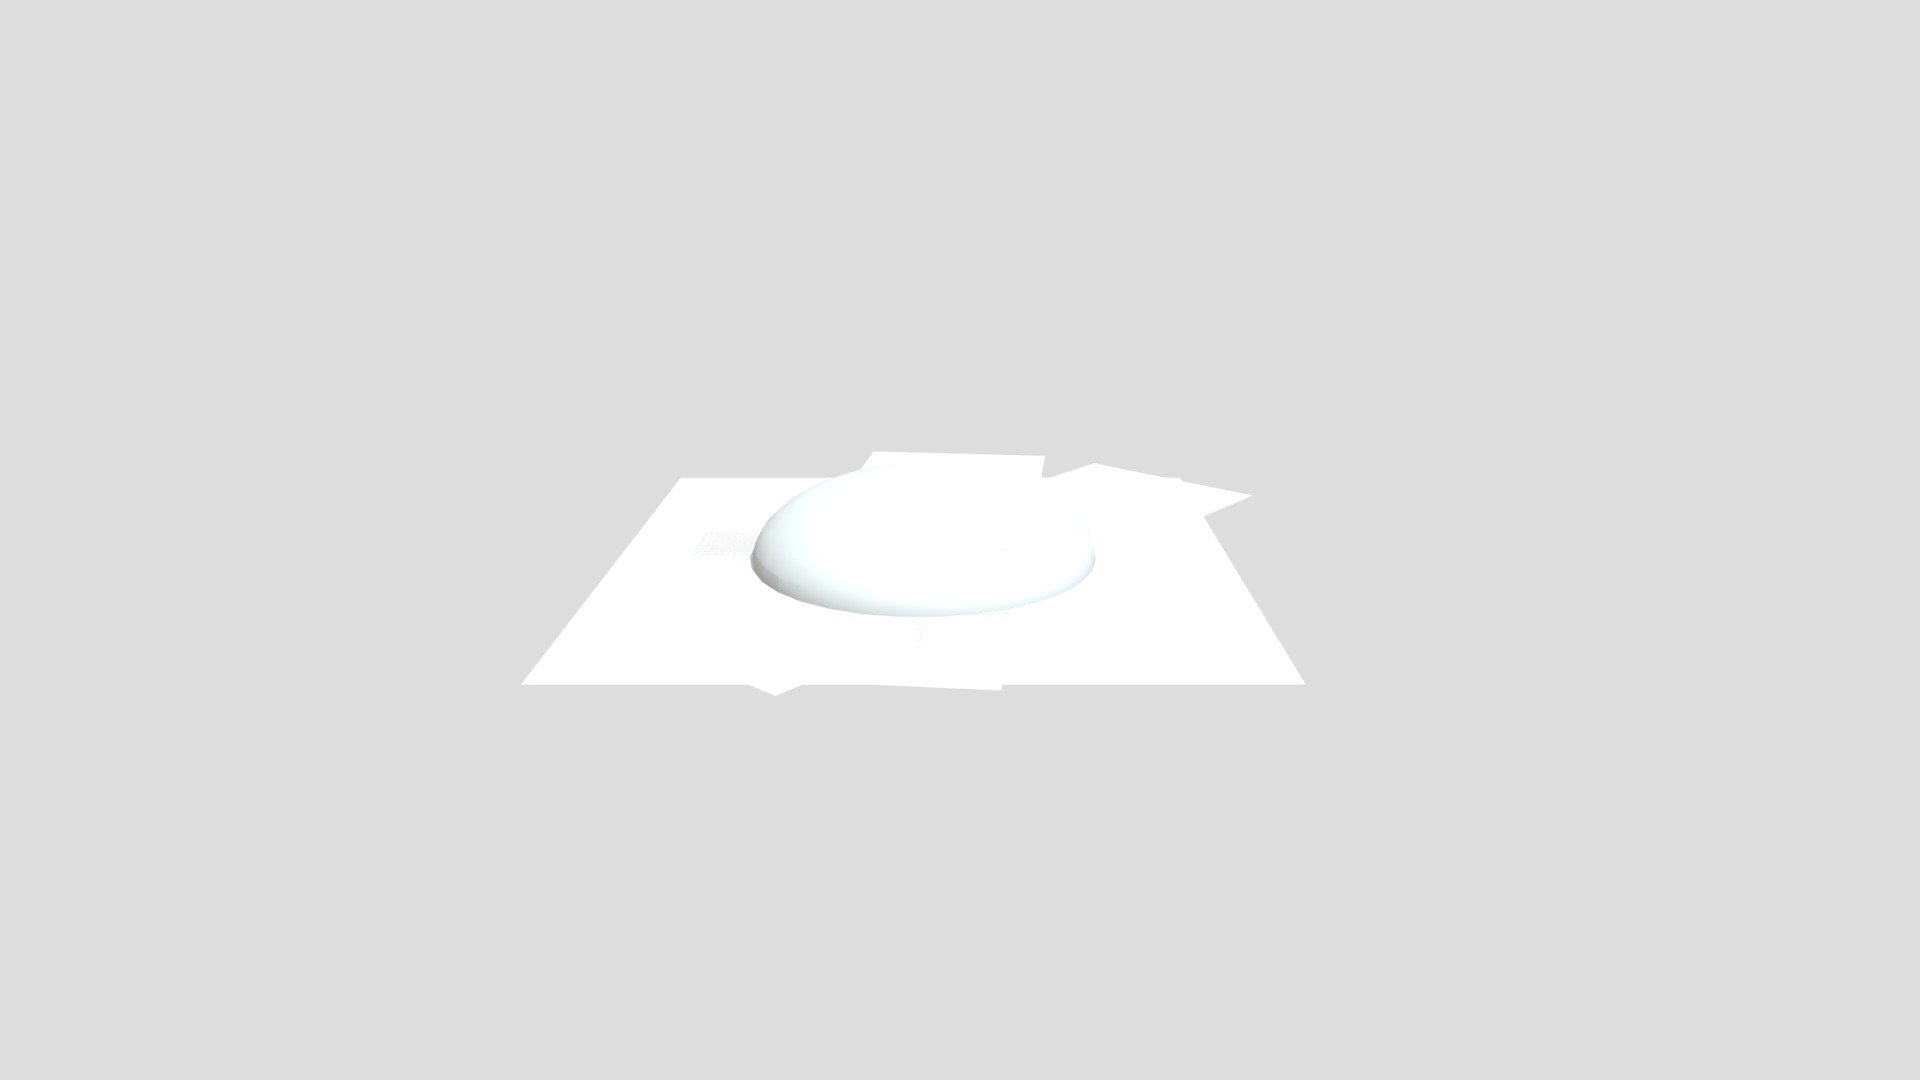 20th Century Fox Logo Destroyed - Download Free 3D model by samuelsaucedaa  (@samuelsaucedaa) [dec0dc6]